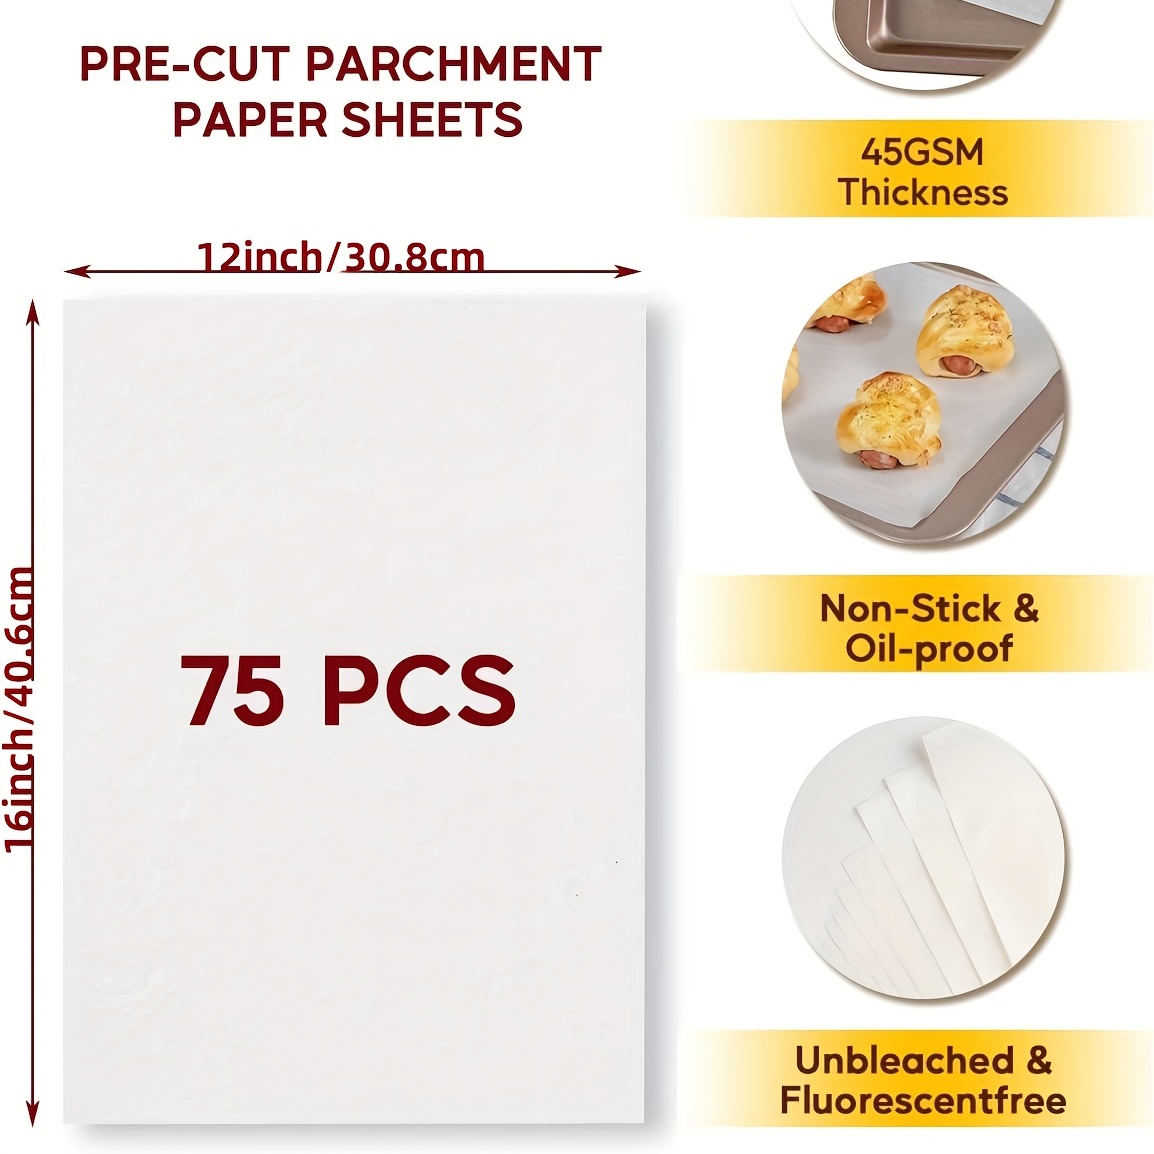 Katbite 200Pcs 12x16 In Precut Parchment Paper Sheets, Heavy Duty Flat Baking  Paper Sheets for Baking Cooking 